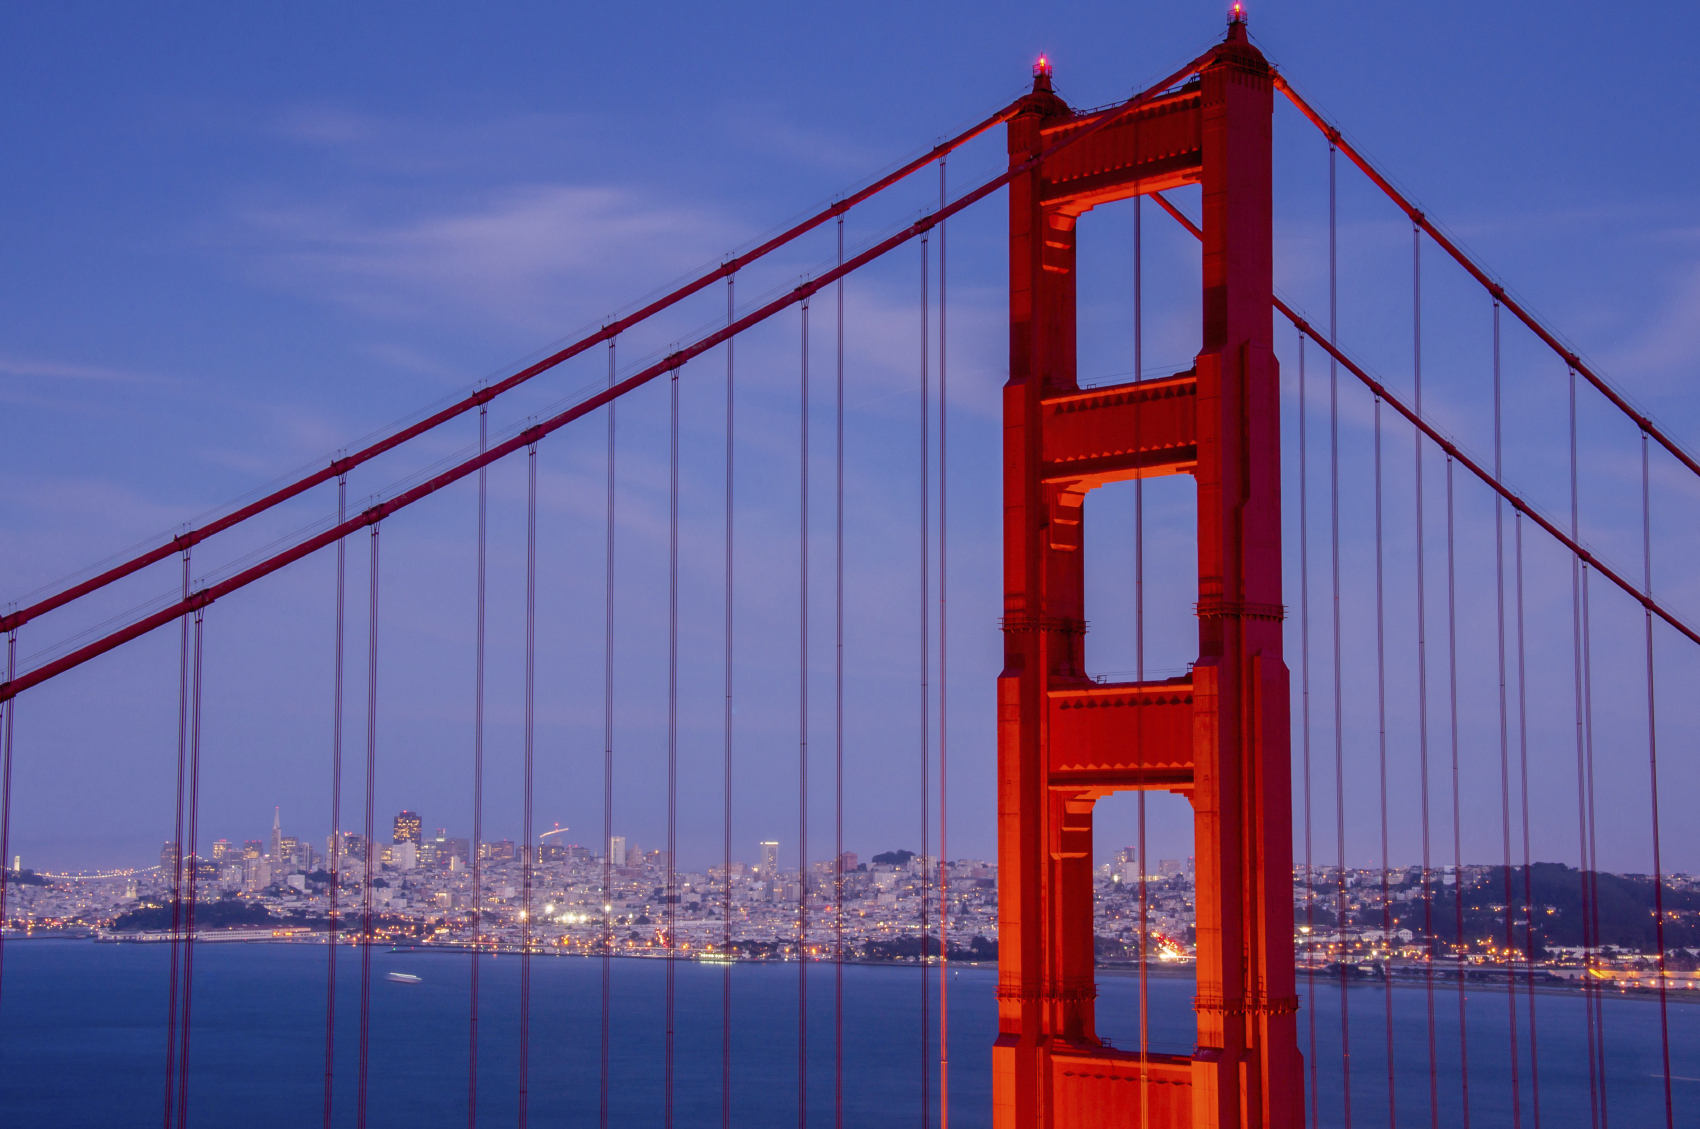 A view of the Marina District through the Golden Gate Bridge